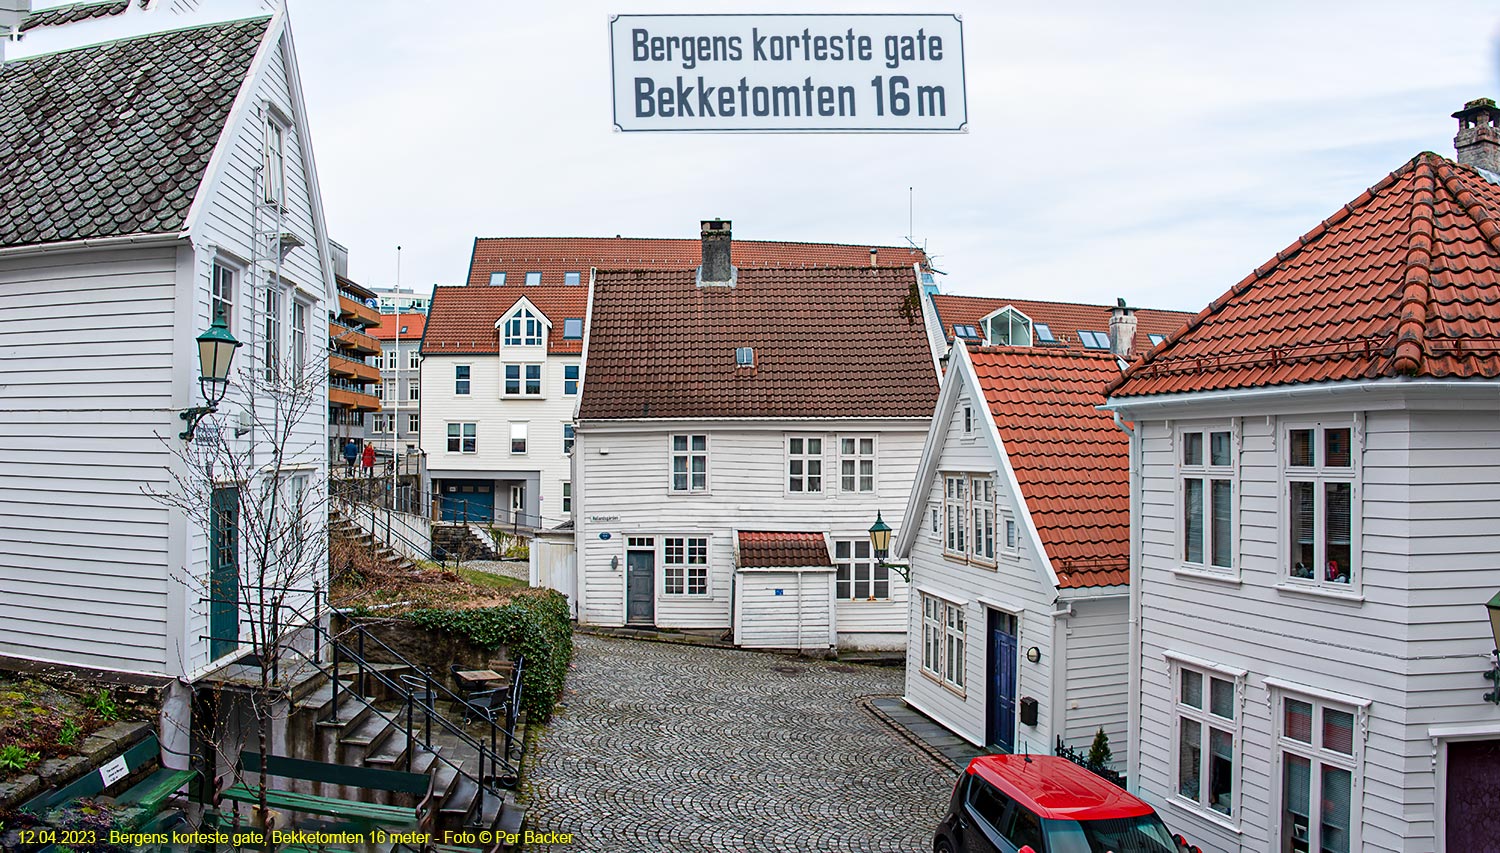 Bergens korteste gate, Bekketomten 16 meter